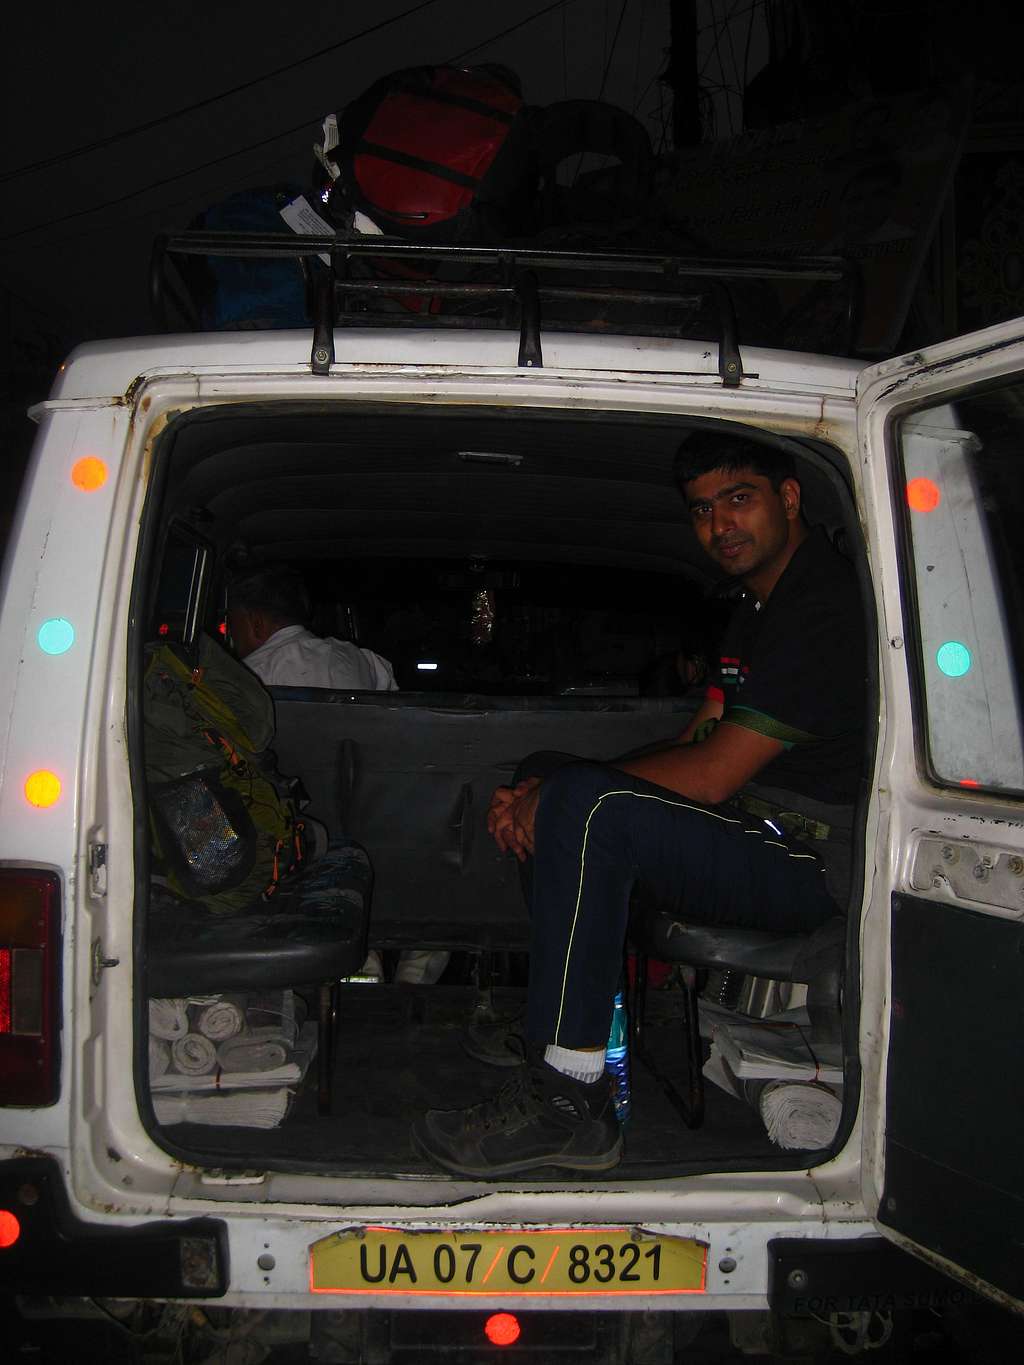 Sitting in the back of the Tavera, for Rishikesh - Uttarkashi travel